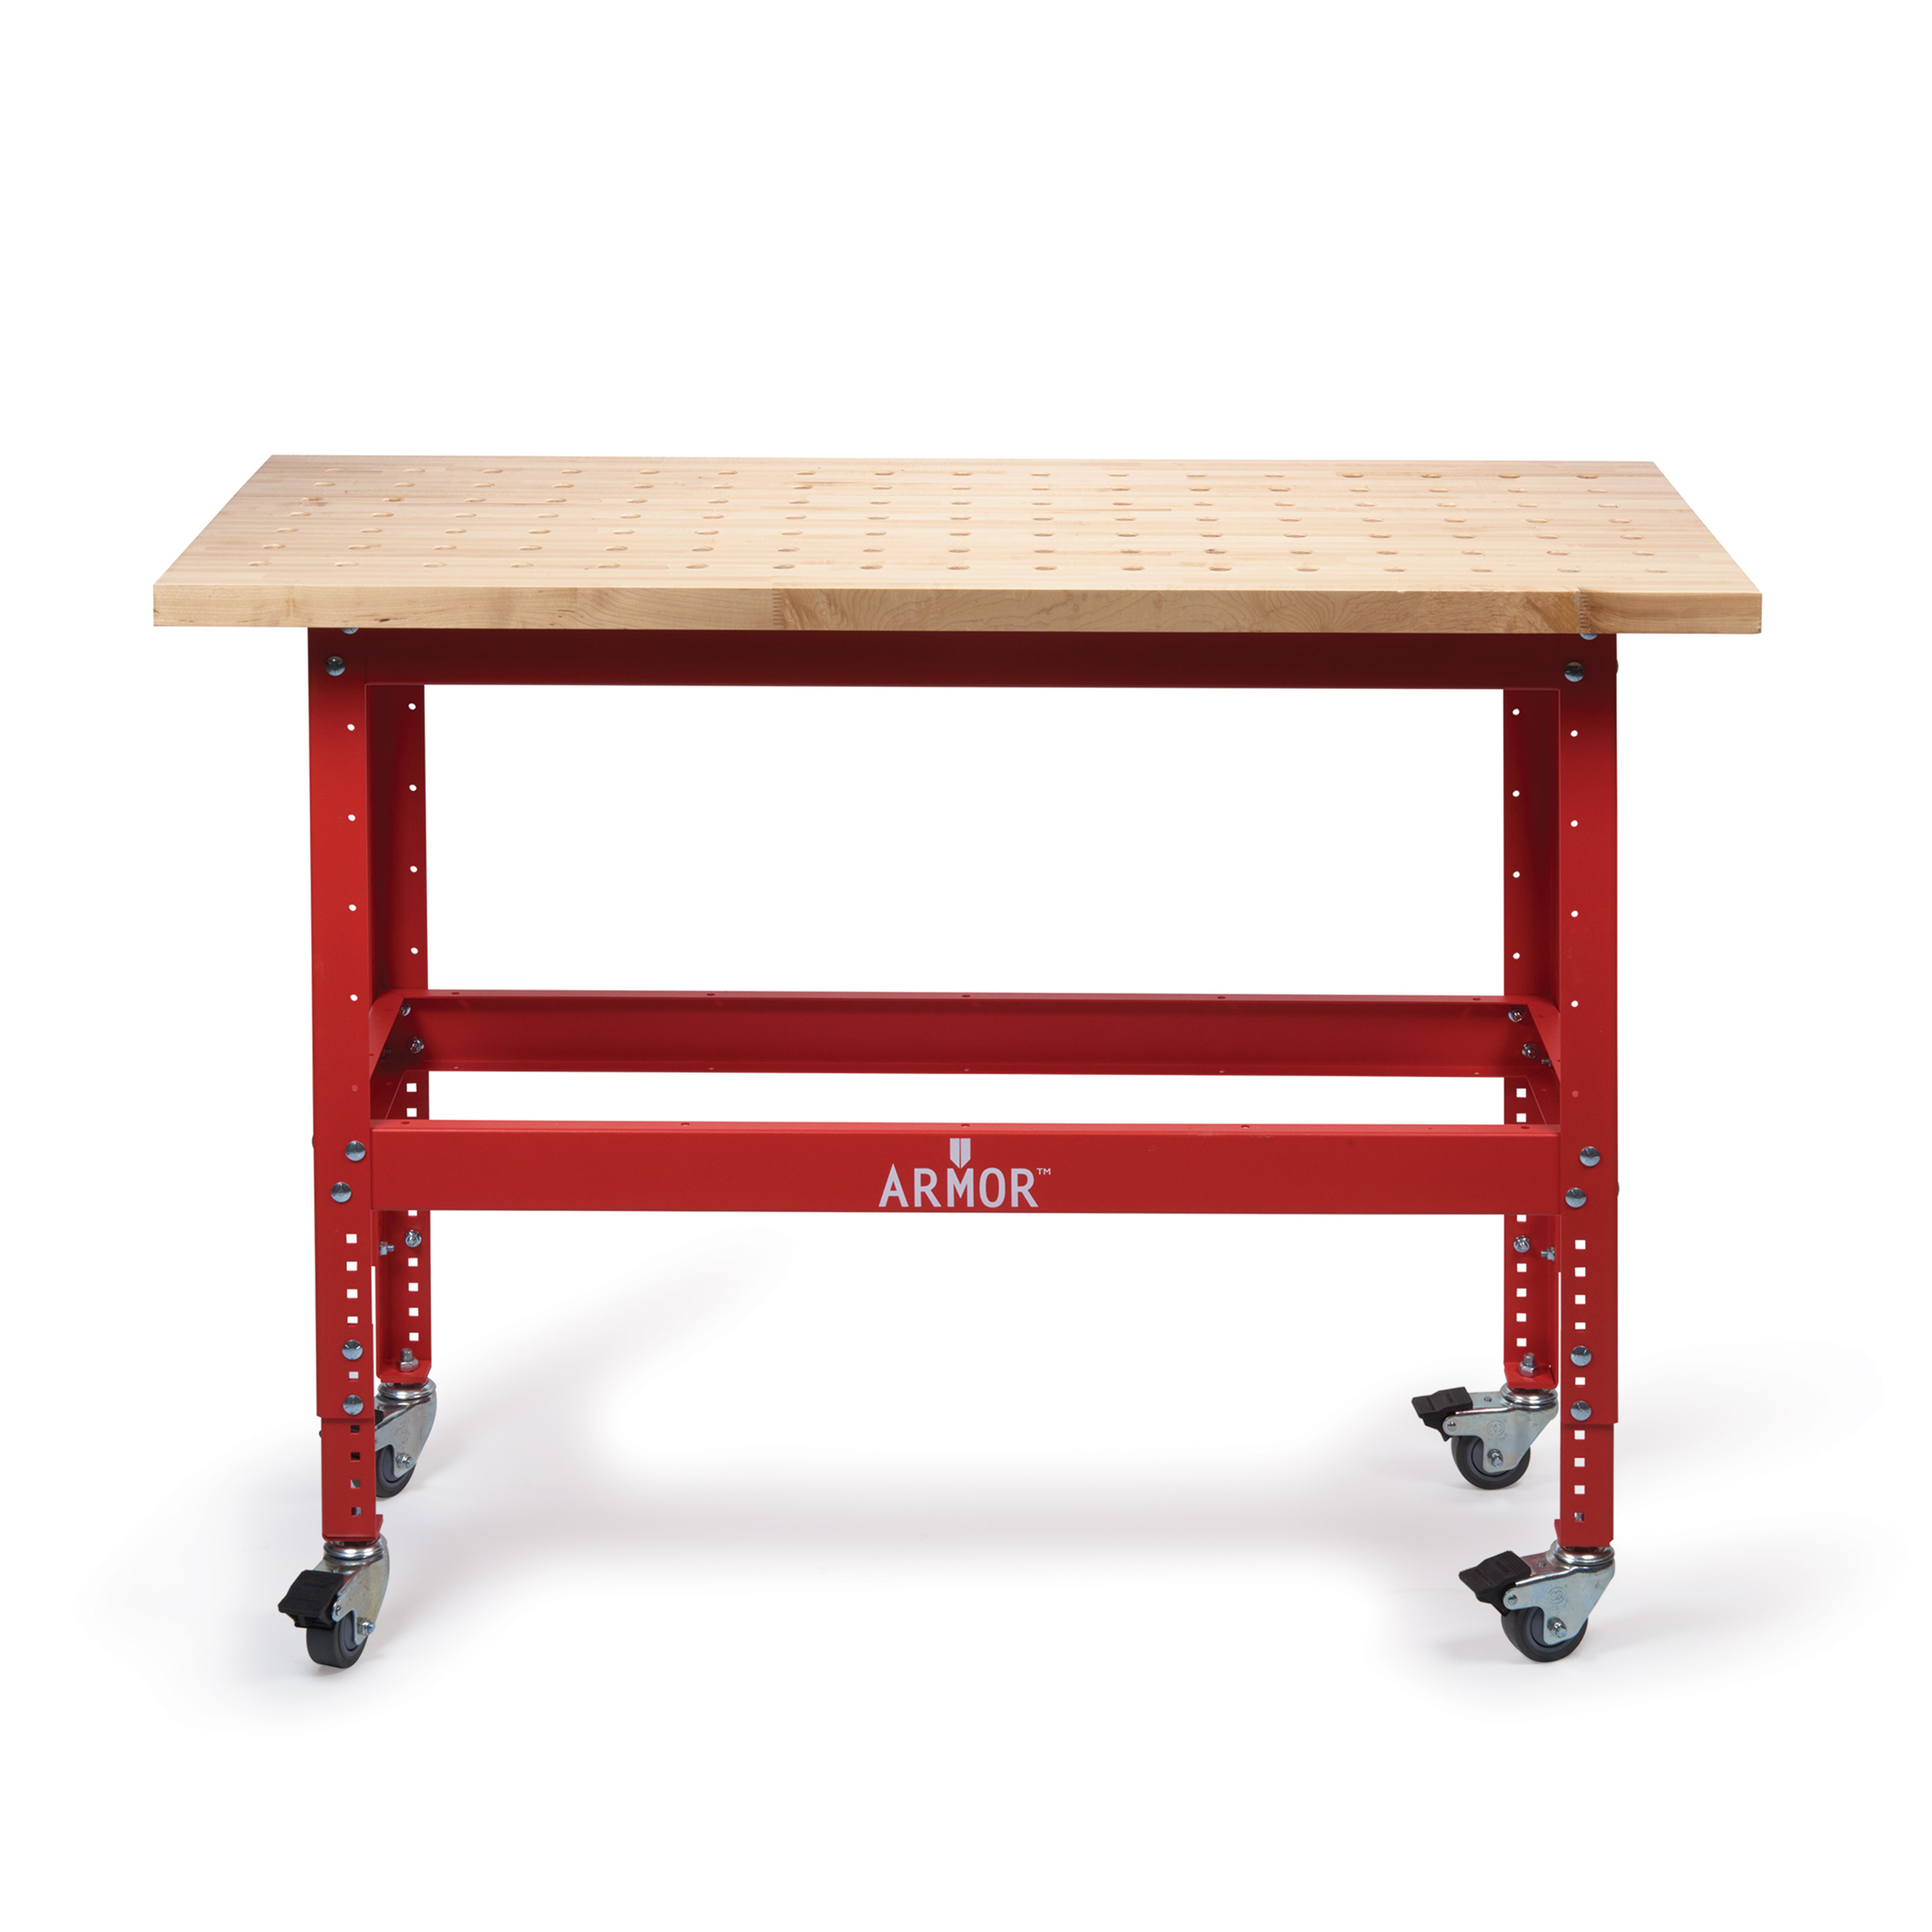 Premium Hardwood Clamp Table 54x25